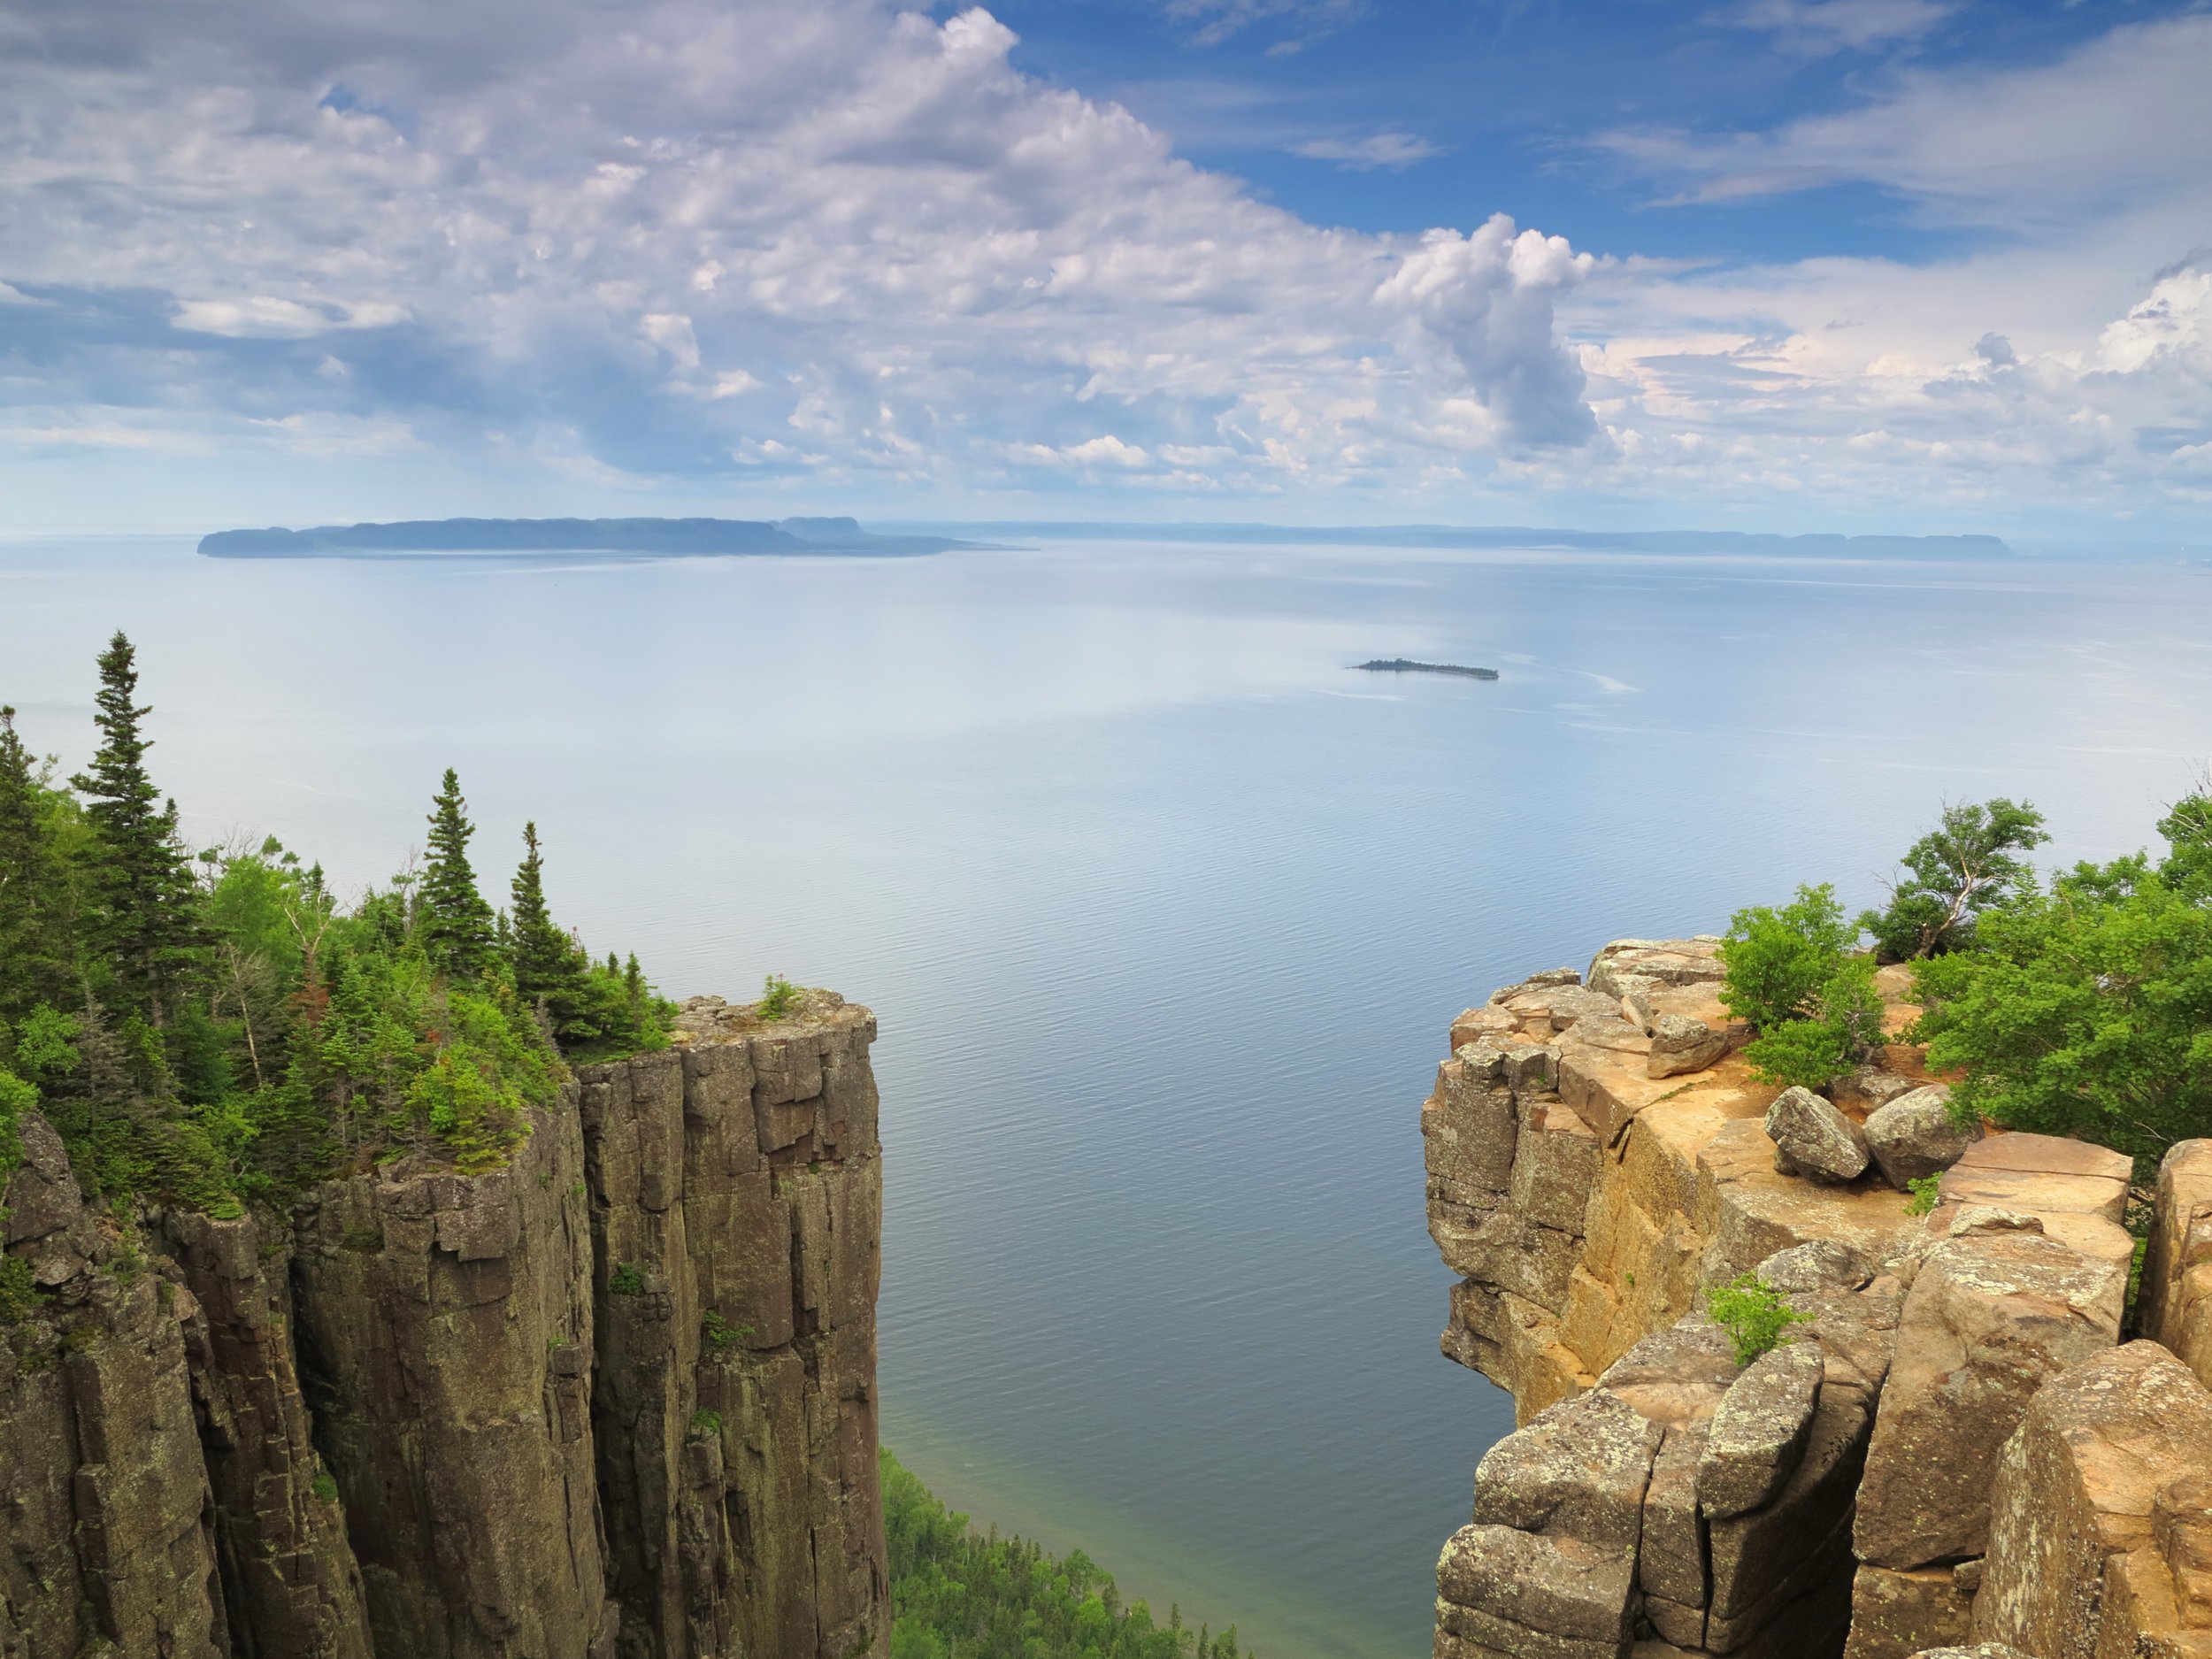 Верхнее. Верхнее (Lake Superior) — озеро. Озеро Супериор США. Великие озера Онтарио. Озеро Гурон Северная Америка.